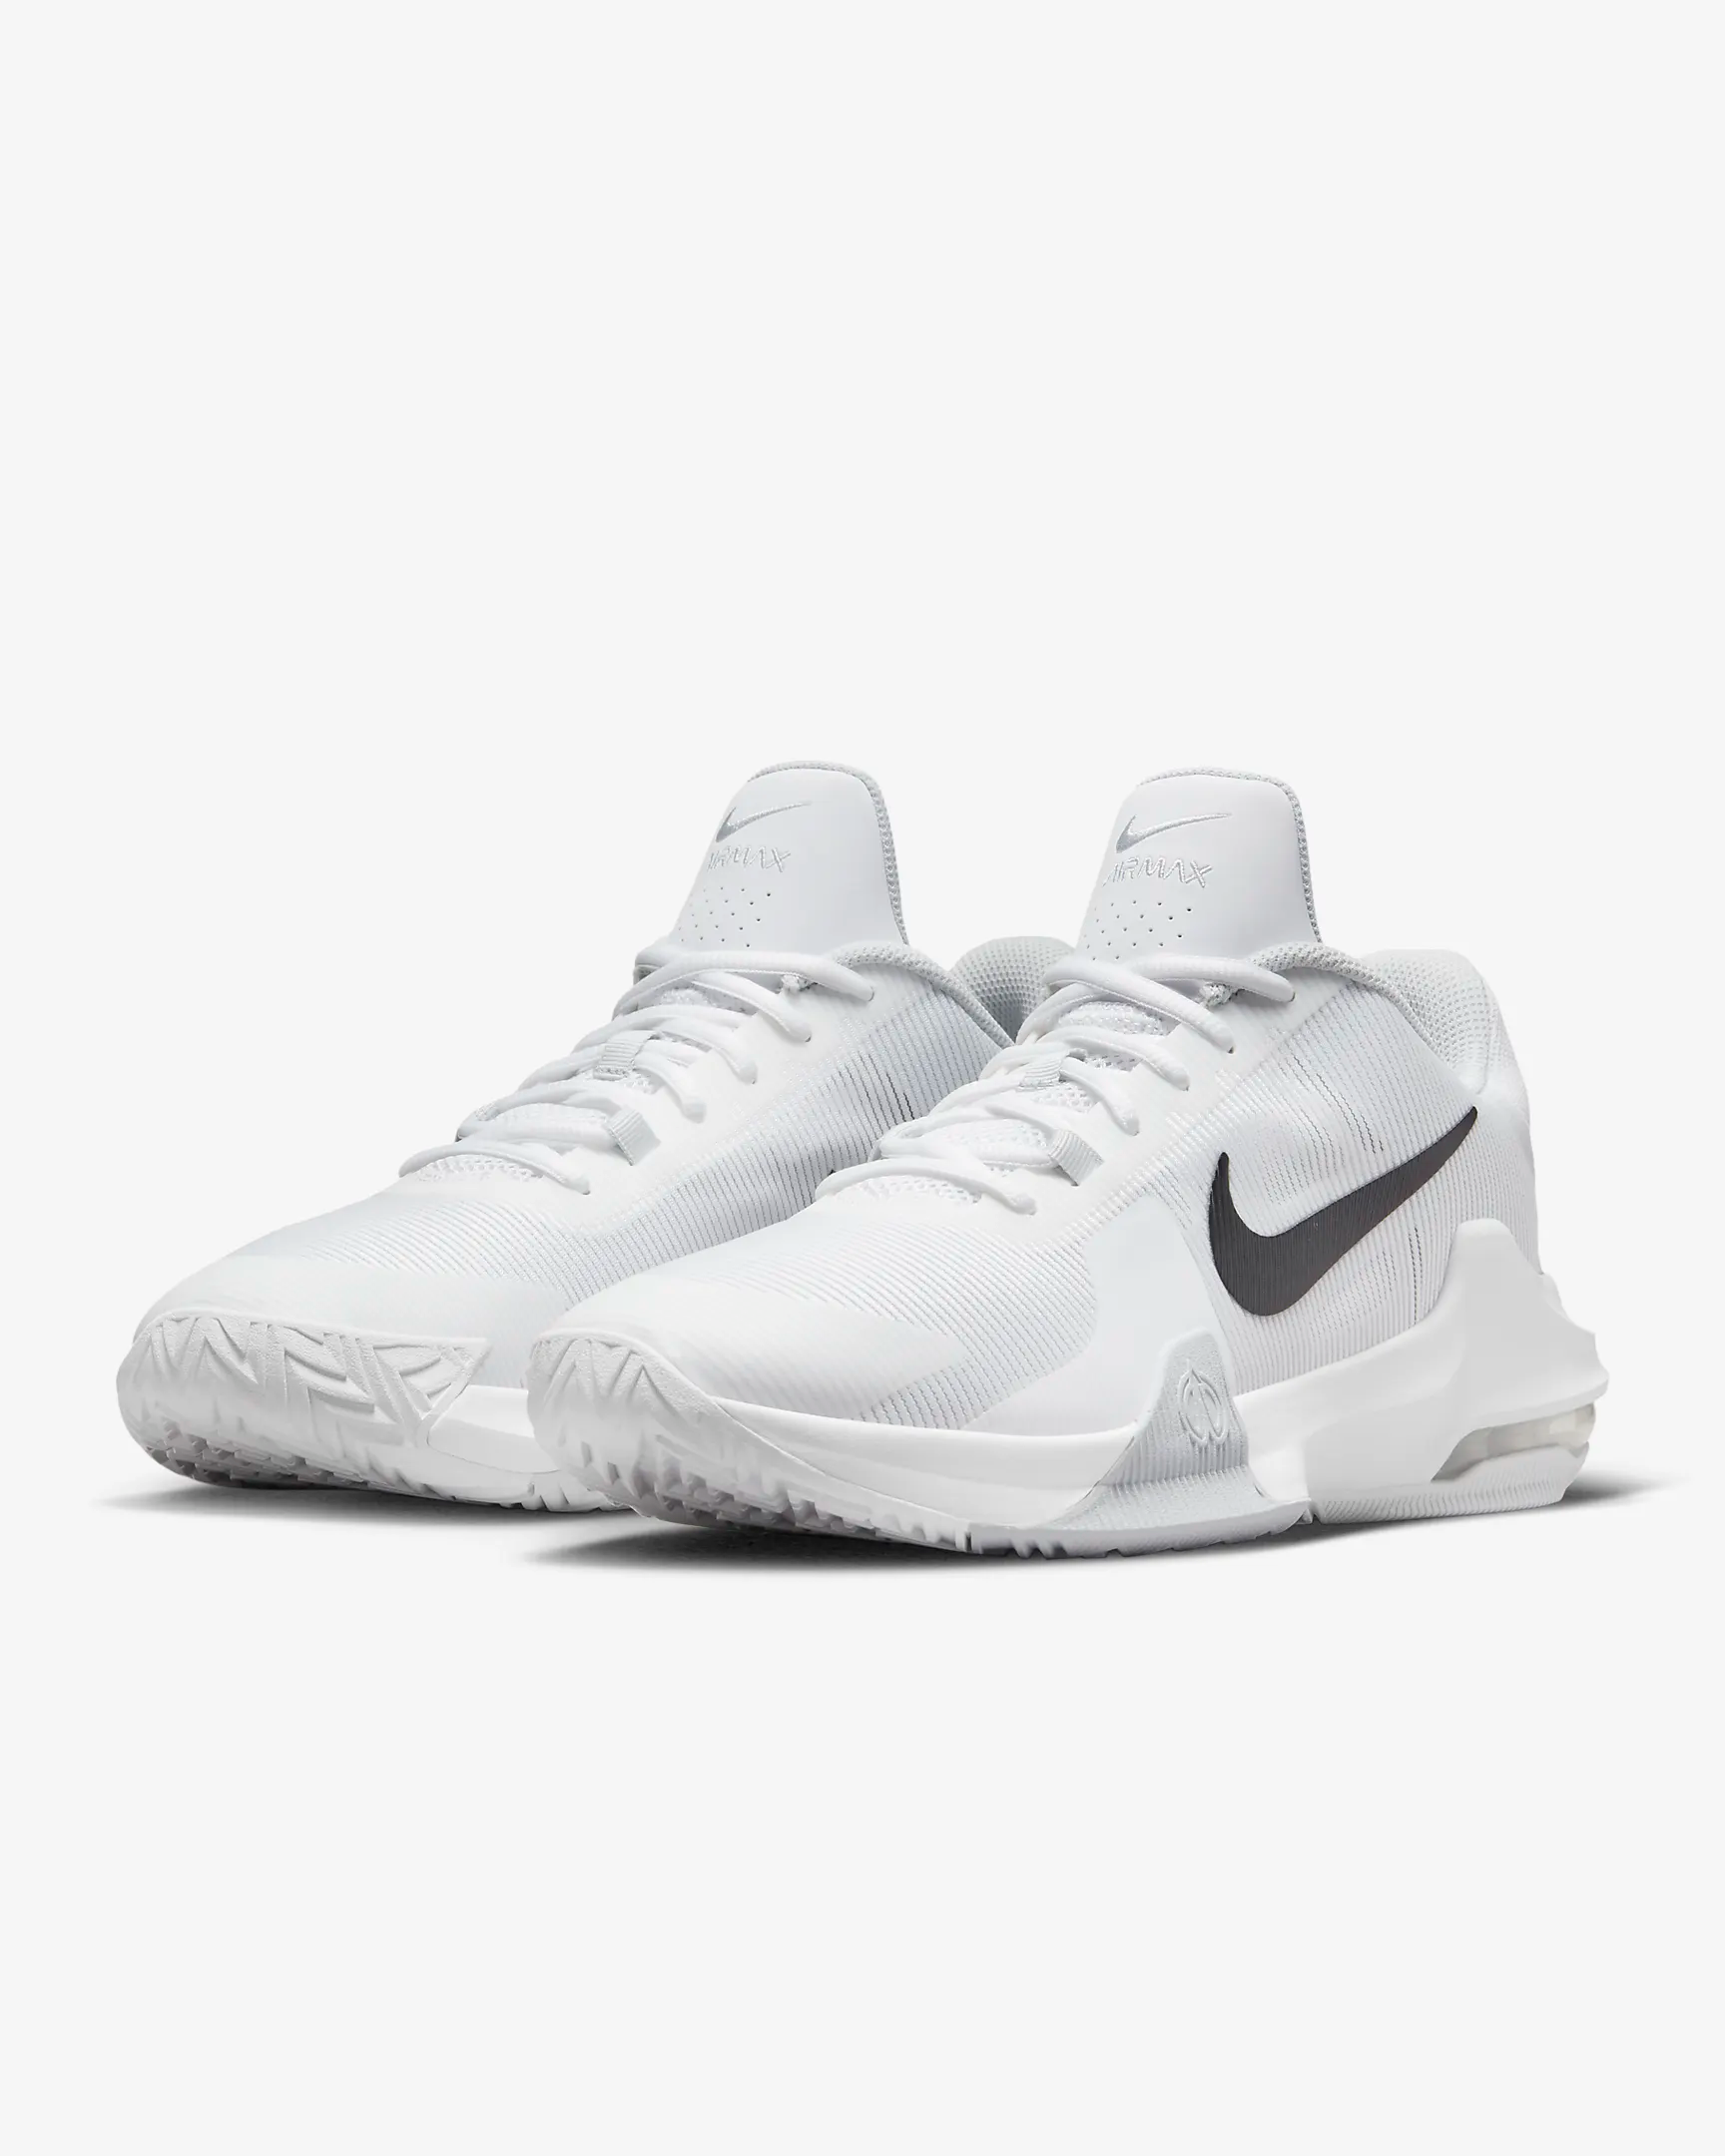 Nike Impact 4 White Basketball Shoes